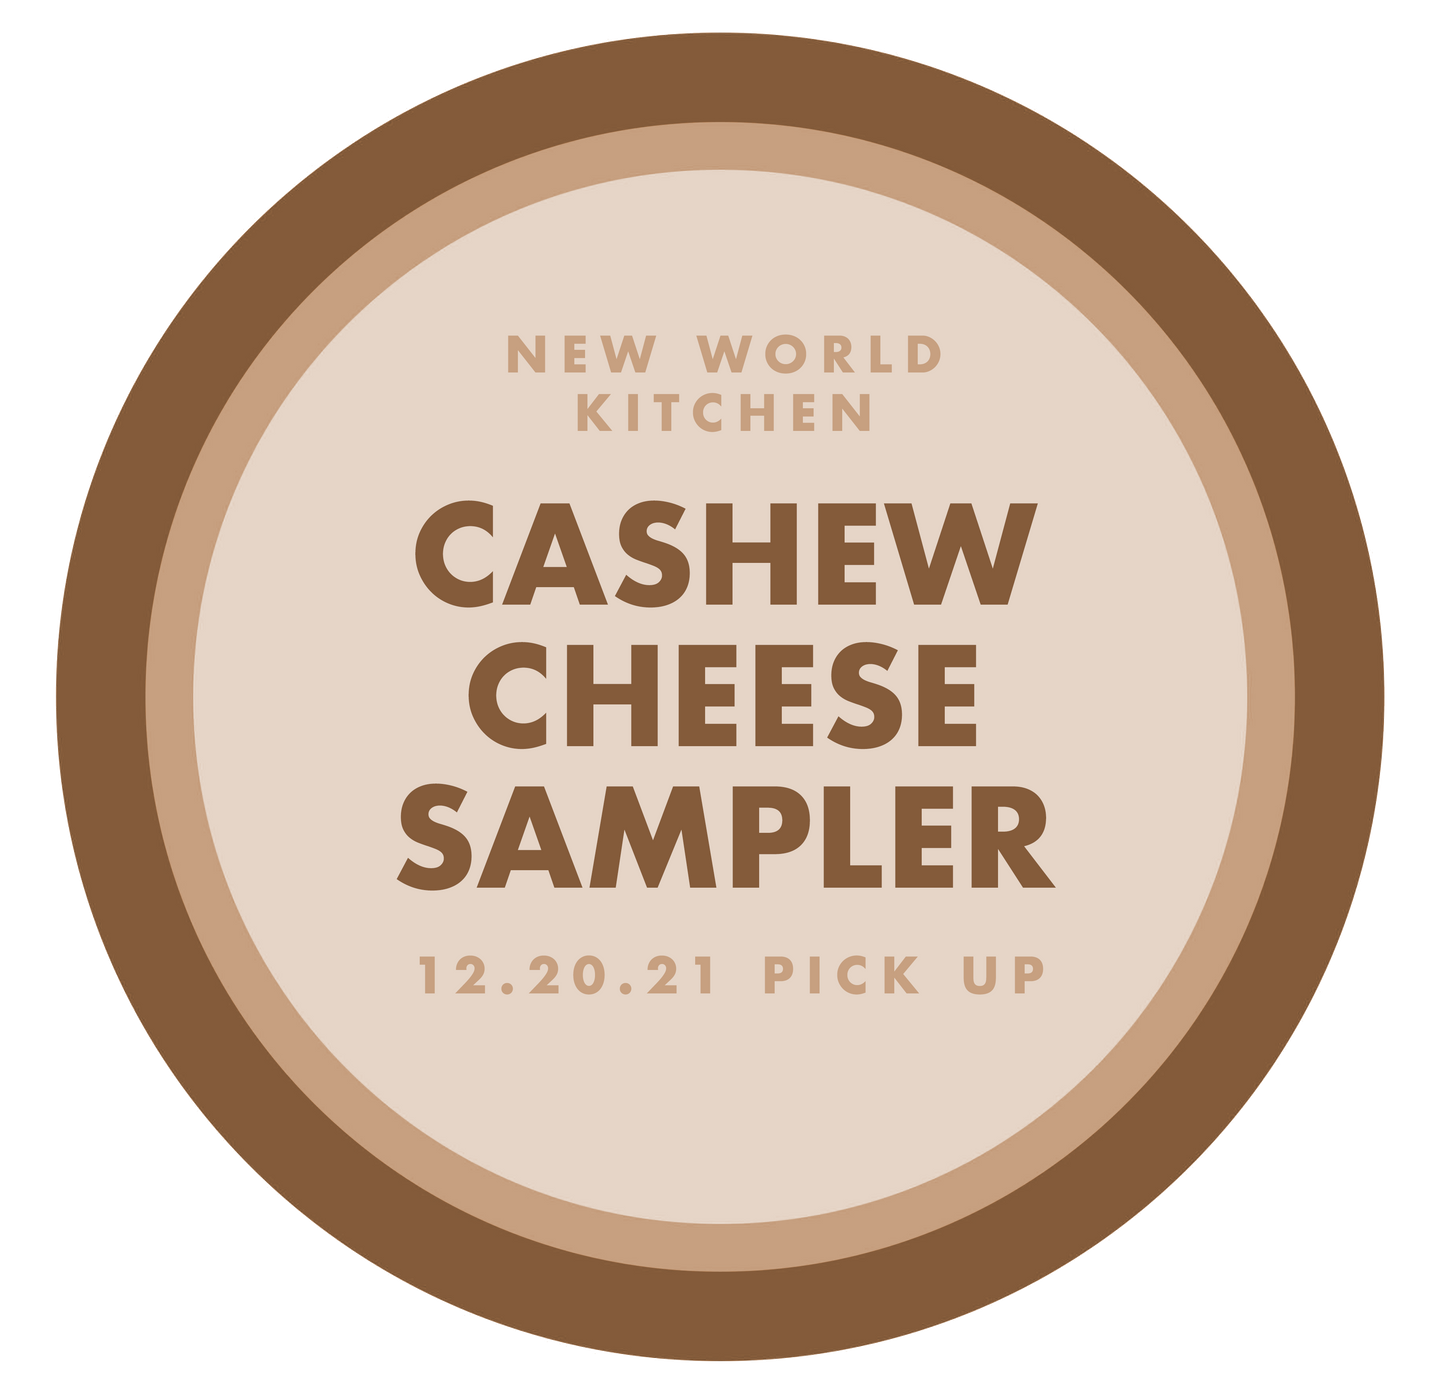 Vegan Cashew Cheese Sampler in Des Moines, Iowa